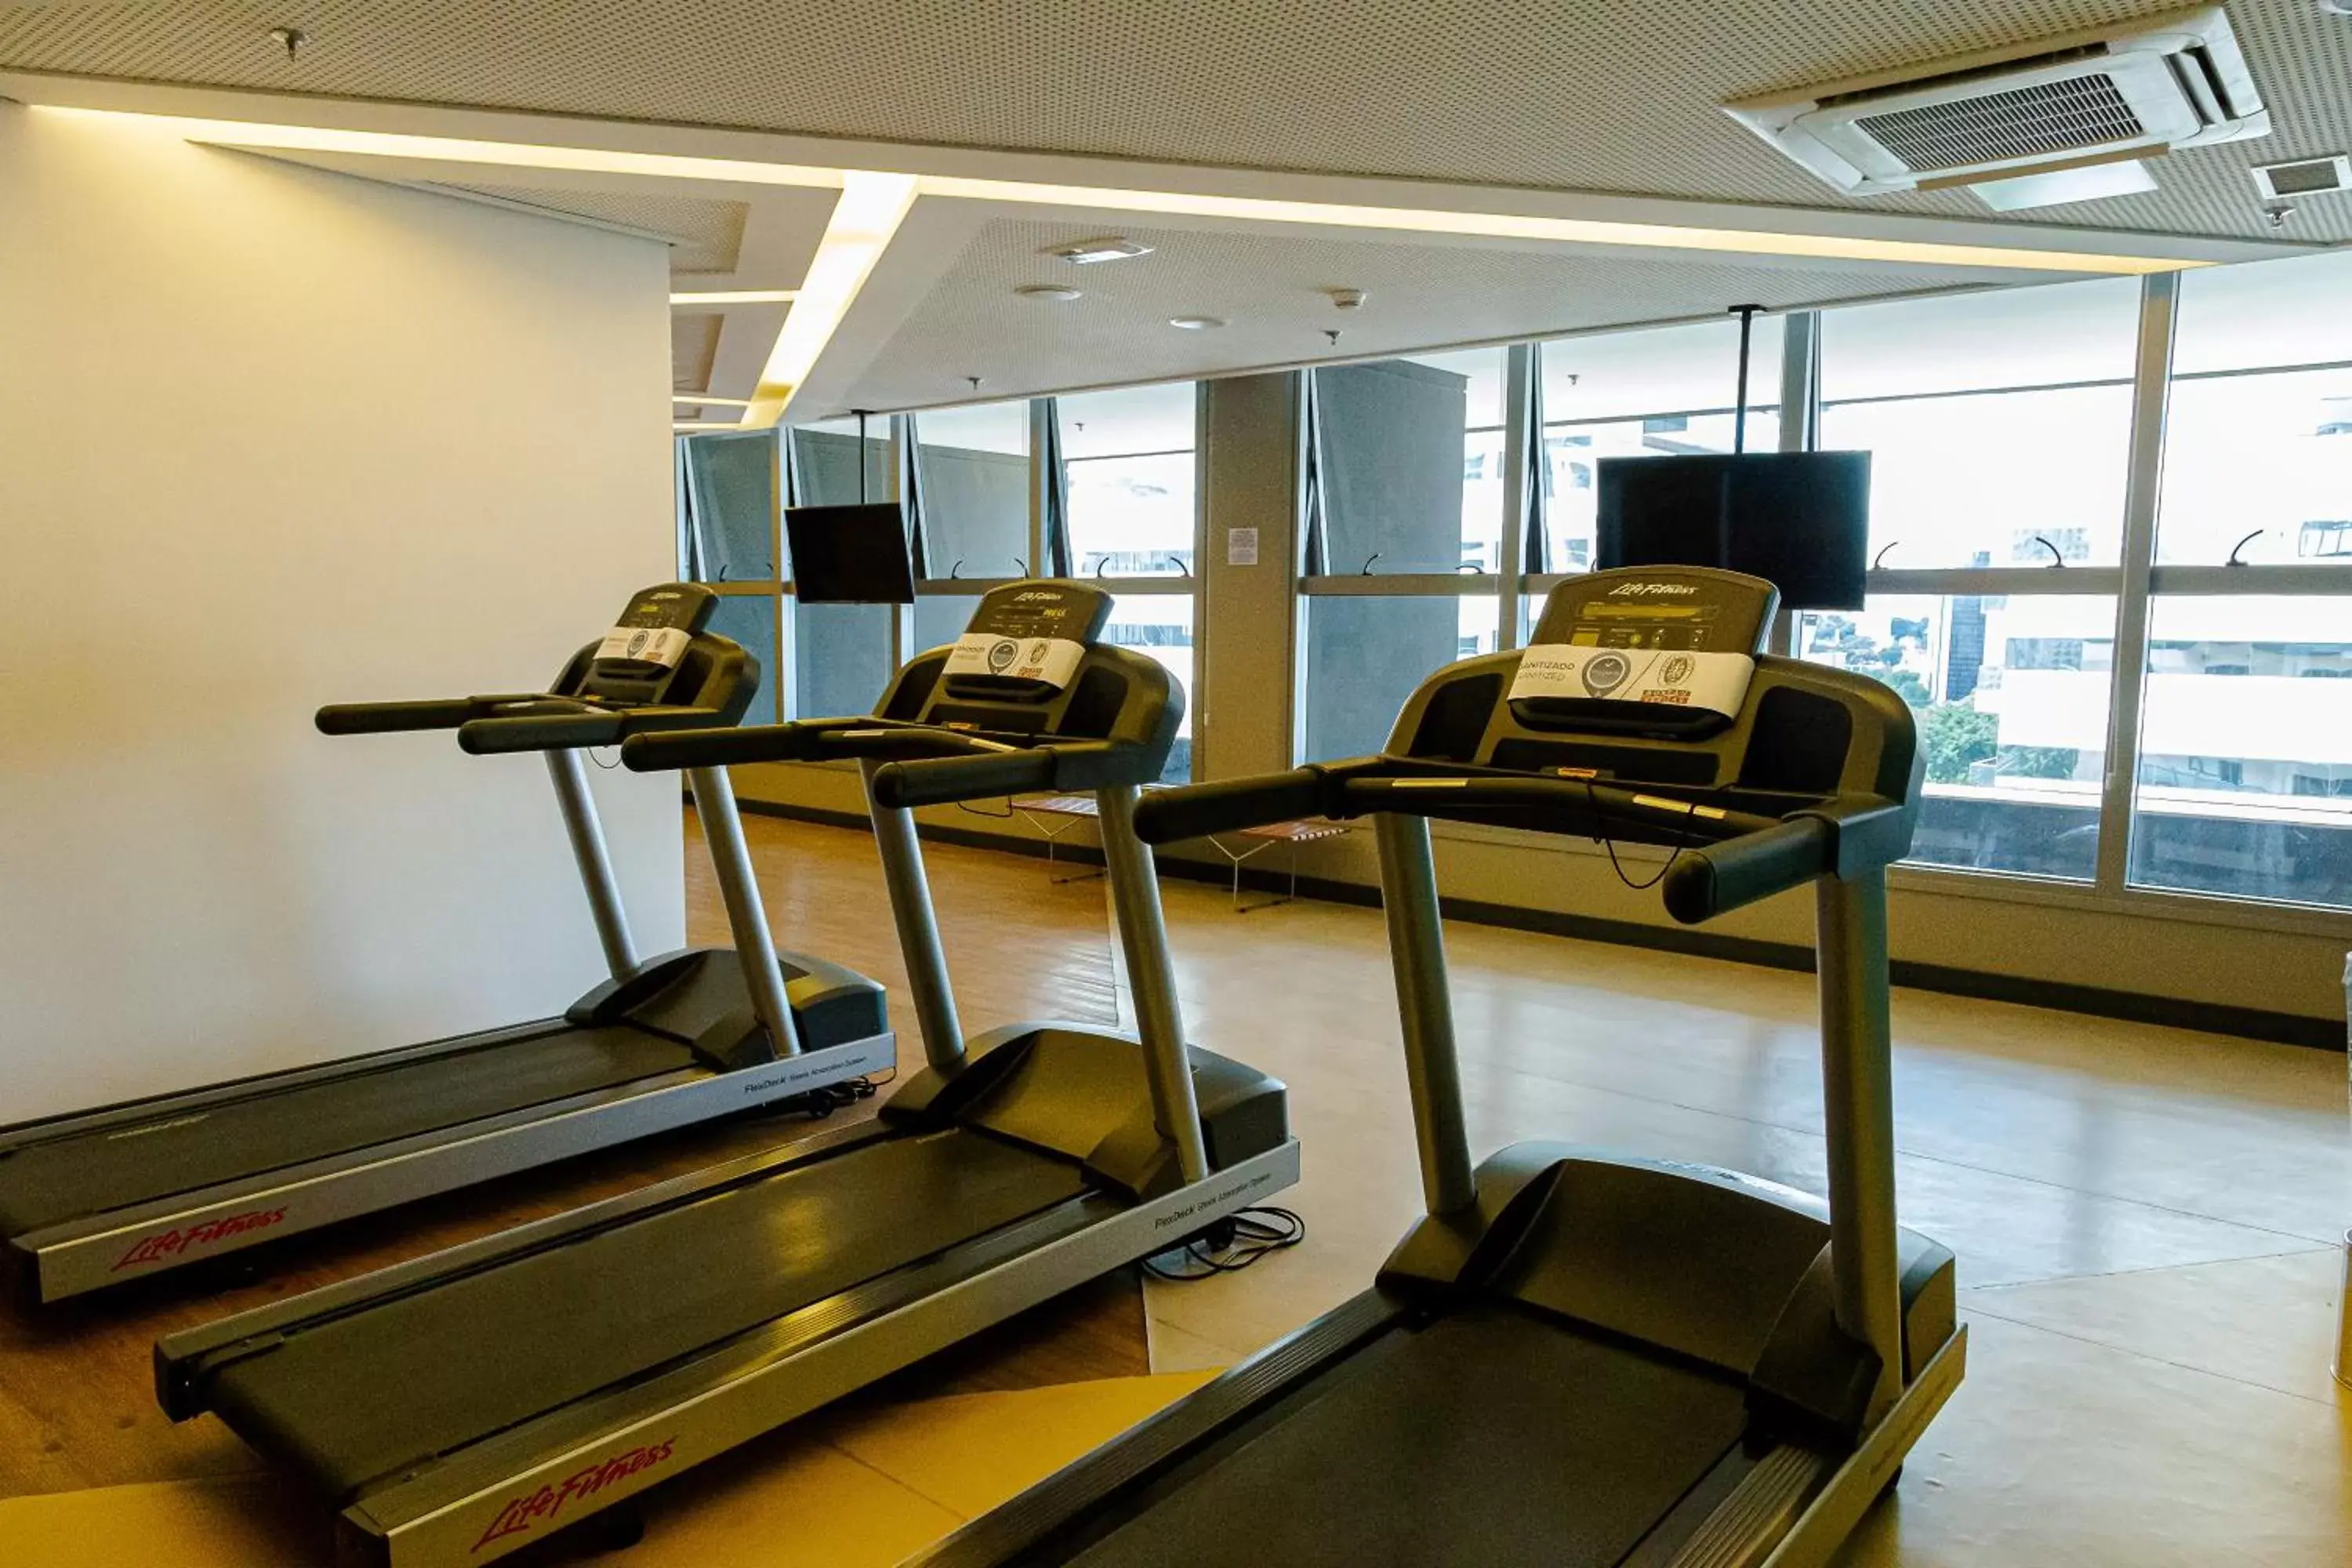 Fitness centre/facilities, Fitness Center/Facilities in Novotel São Paulo Berrini